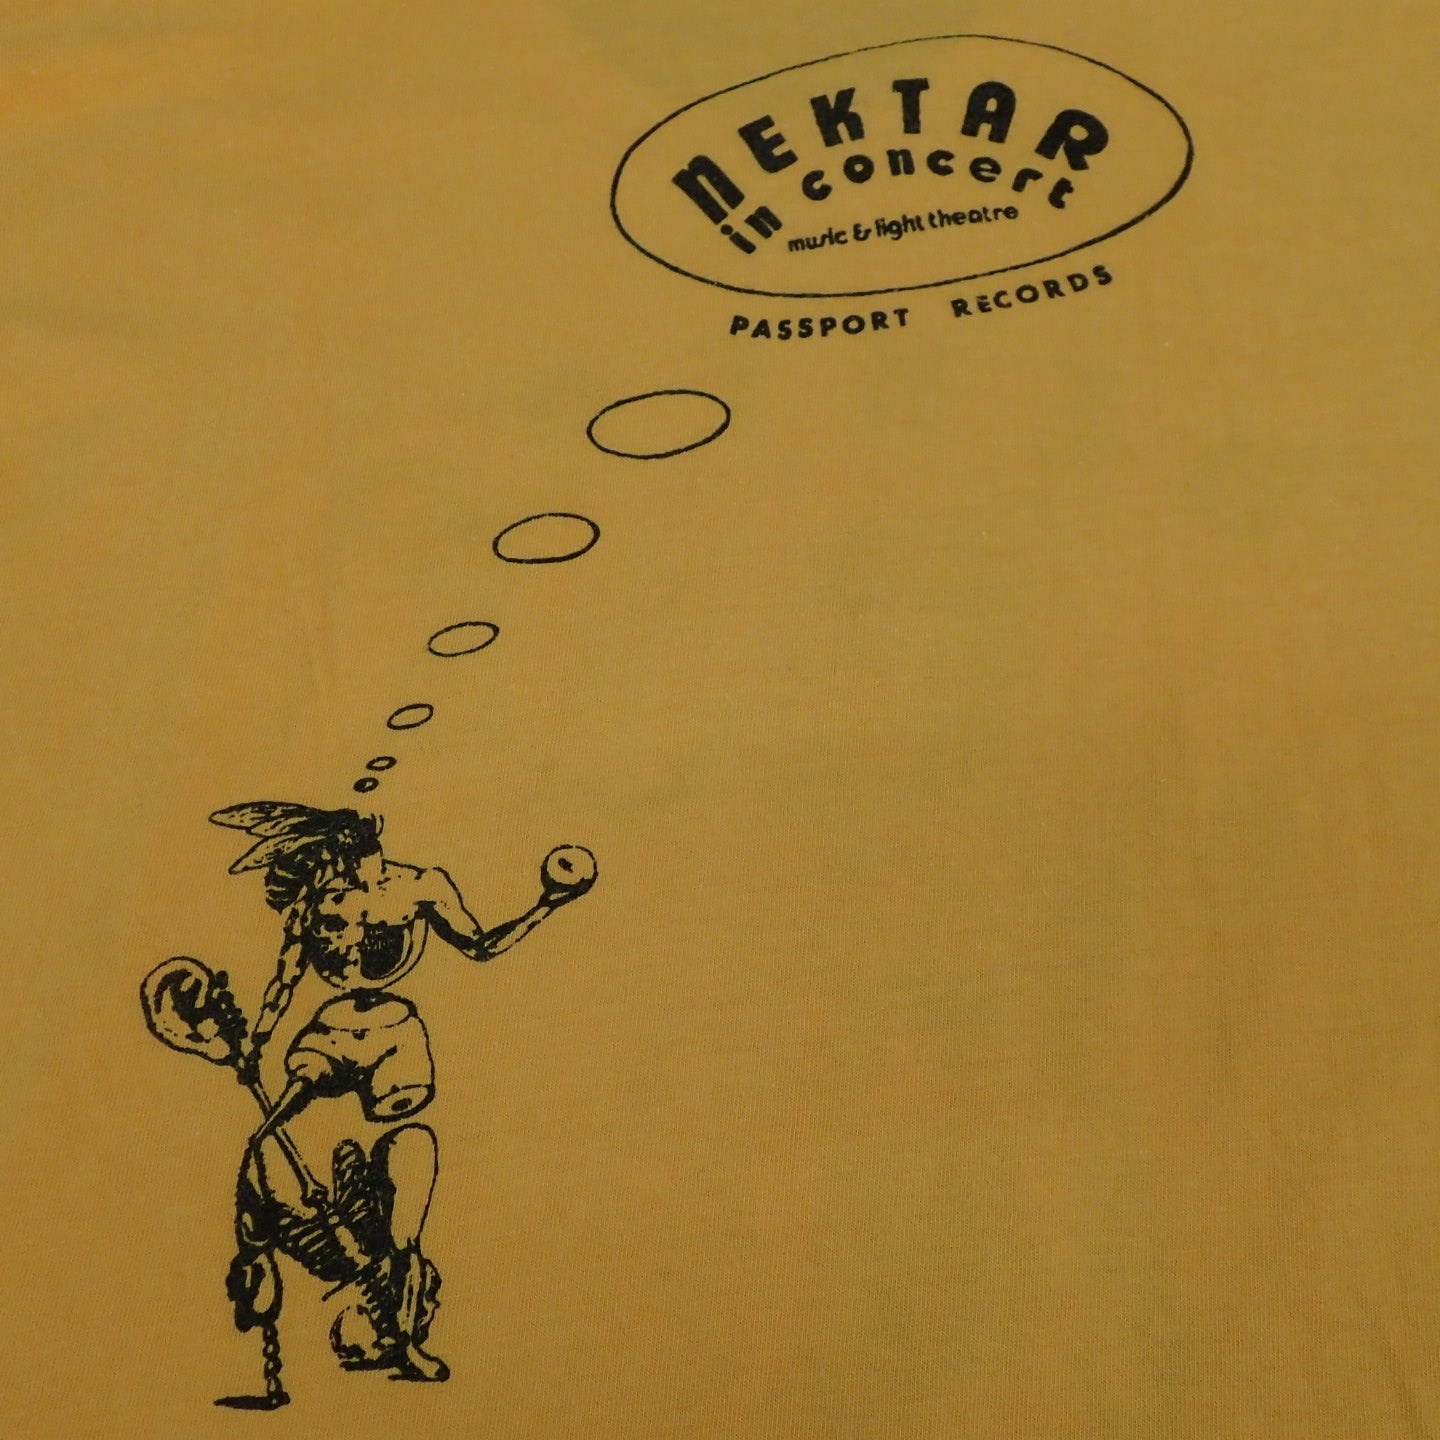 70s Nektar " Tour Promo Tee "